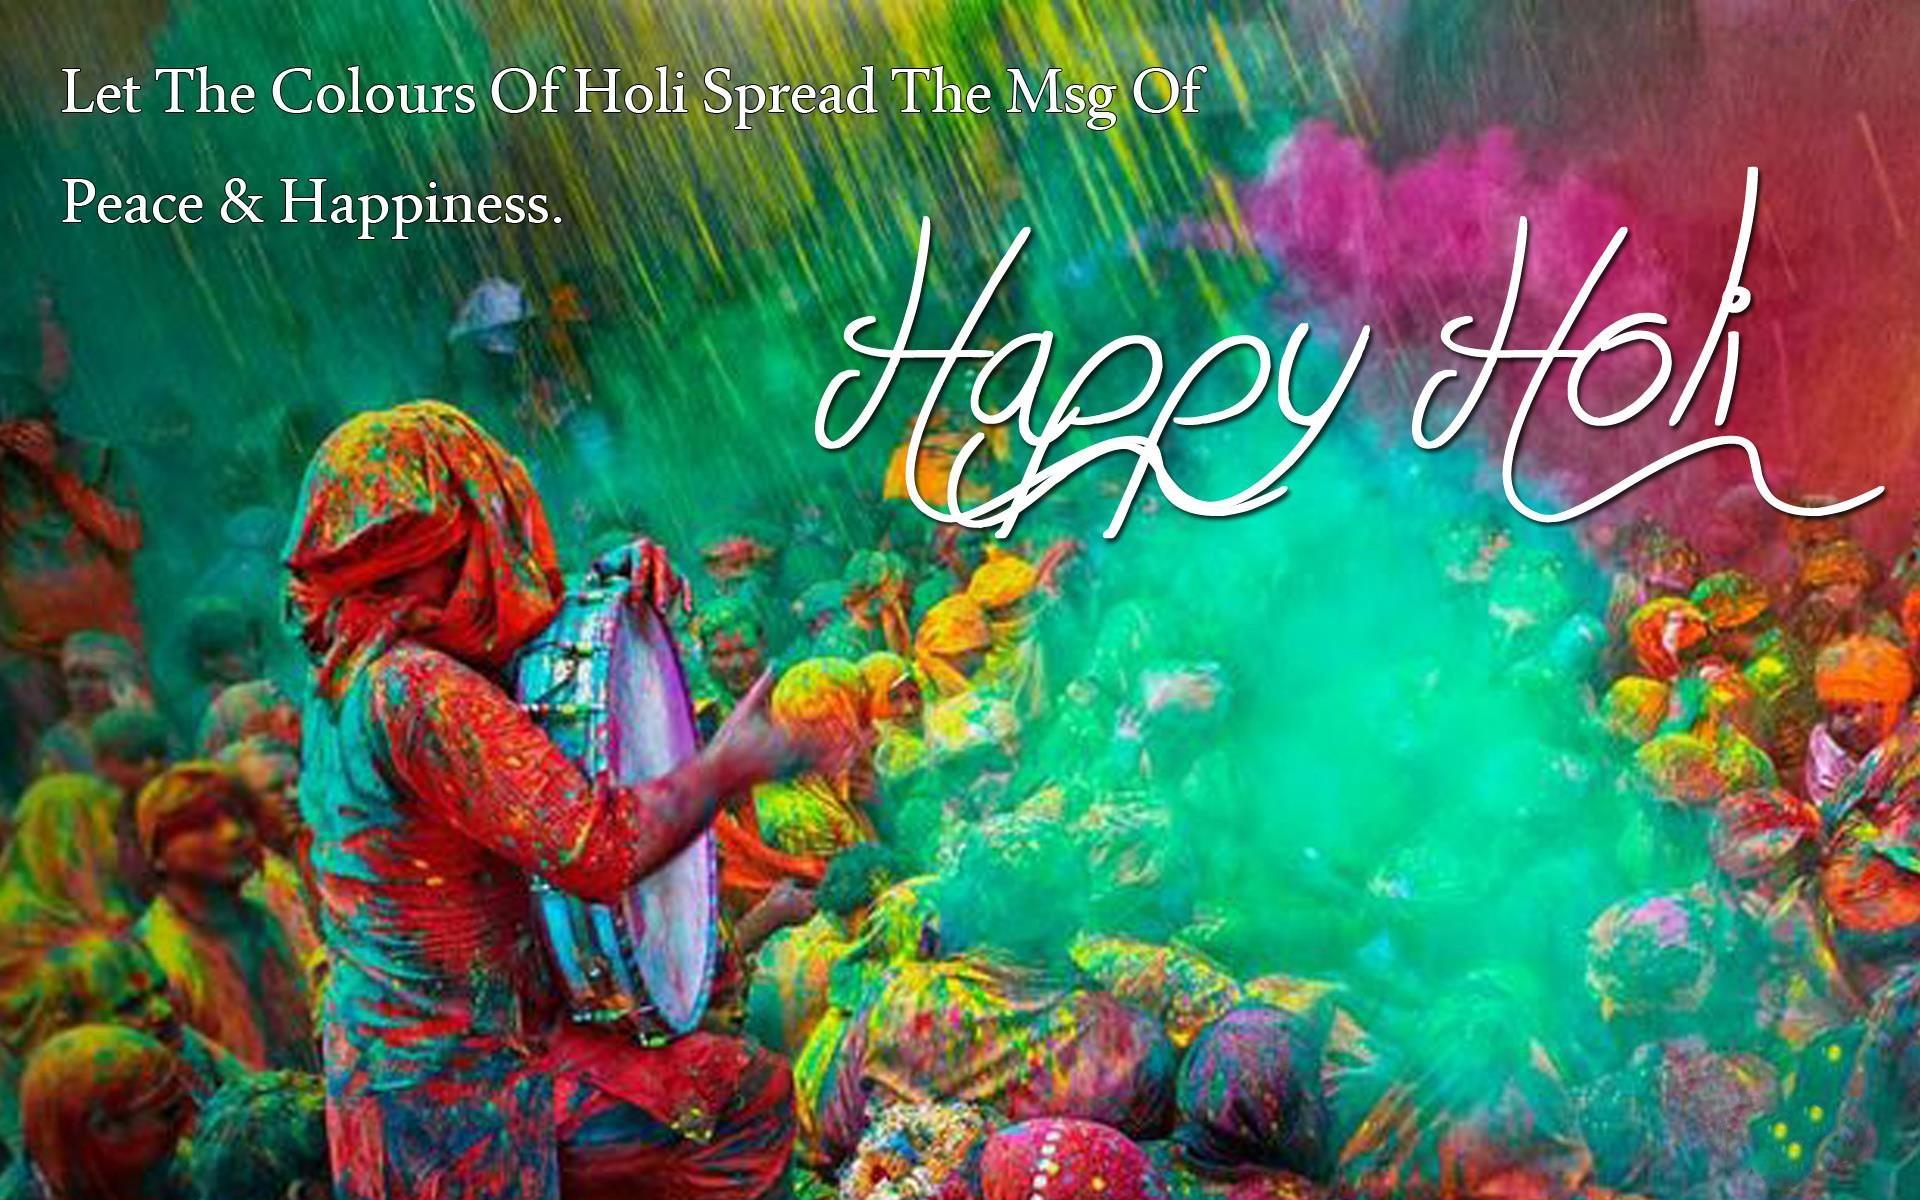 Happy Holi 2019 Image, Quotes, Wishes, Greetings, Messages, Shayari